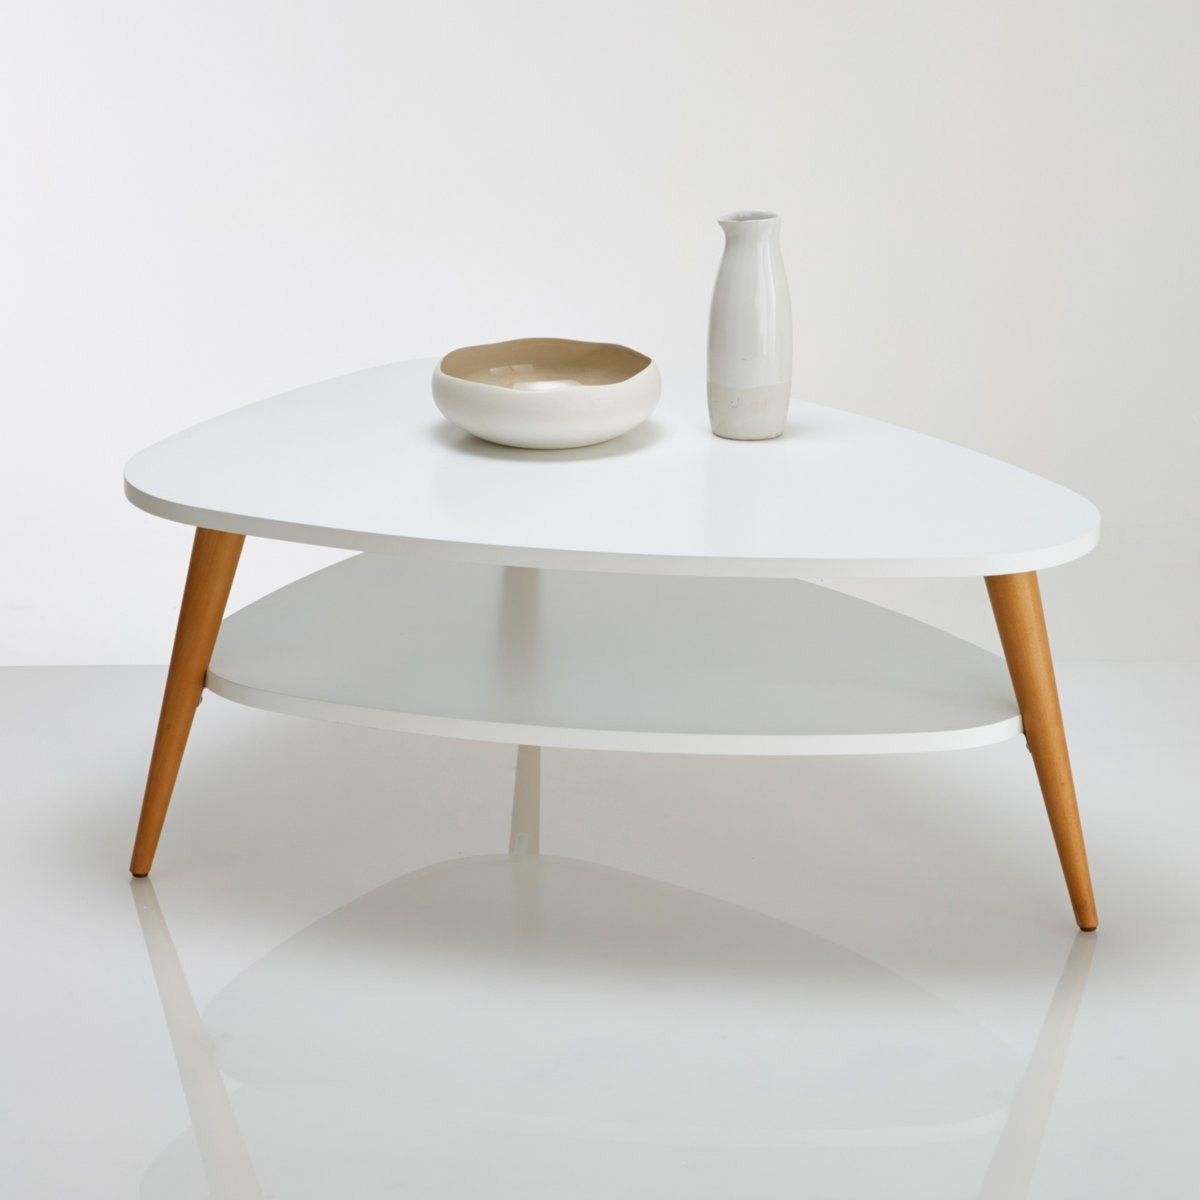 Petite table basse bois blanc